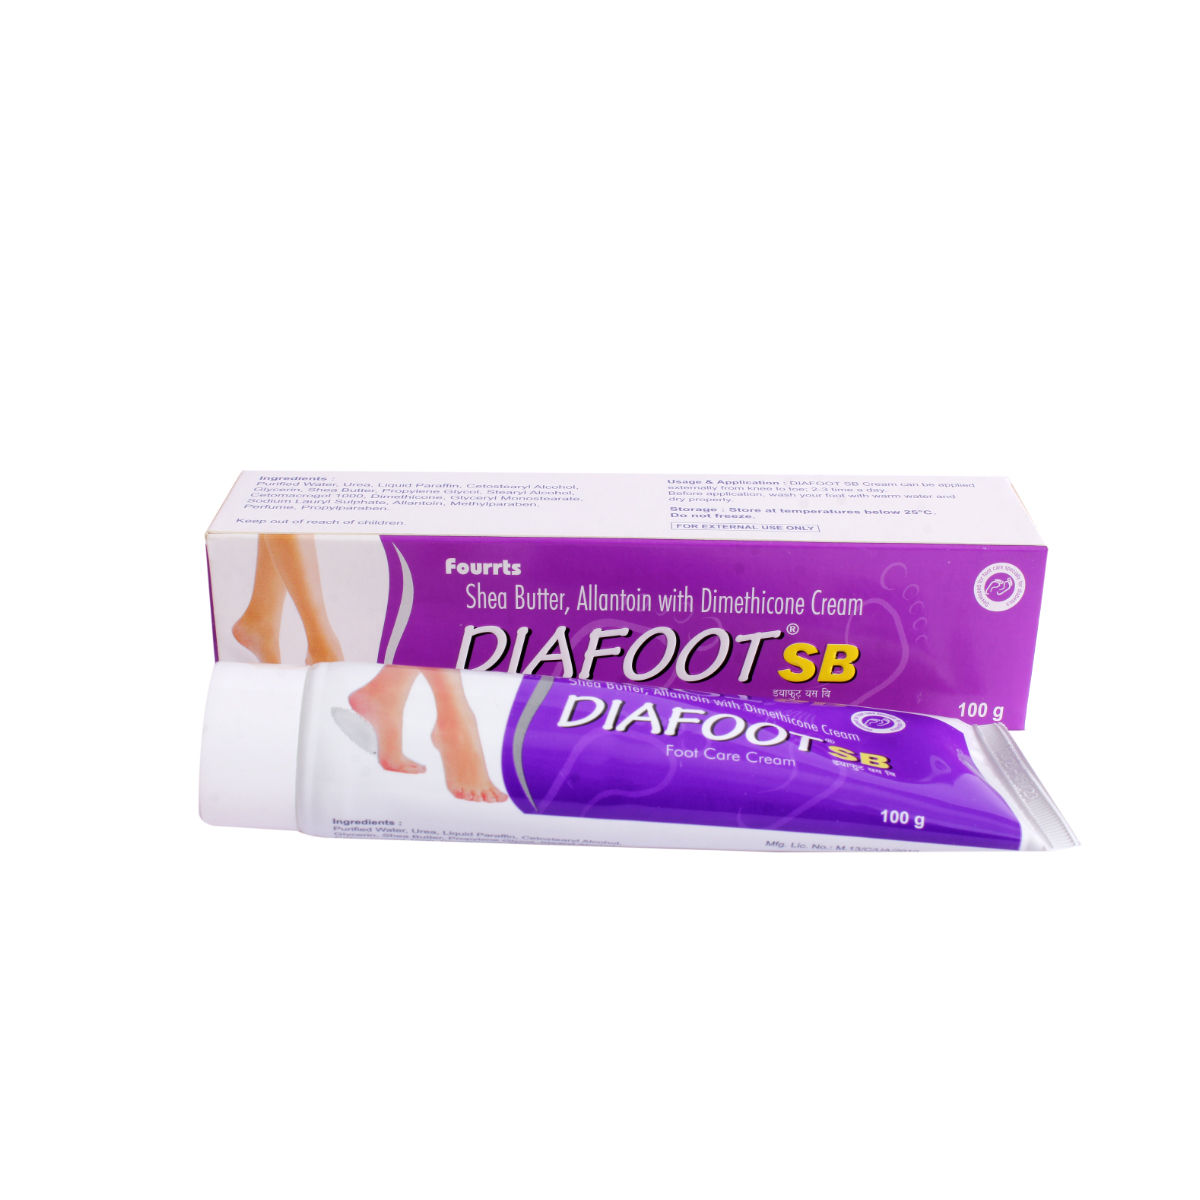 Diafoot SB Foot Cream 100 gm, Pack of 1 